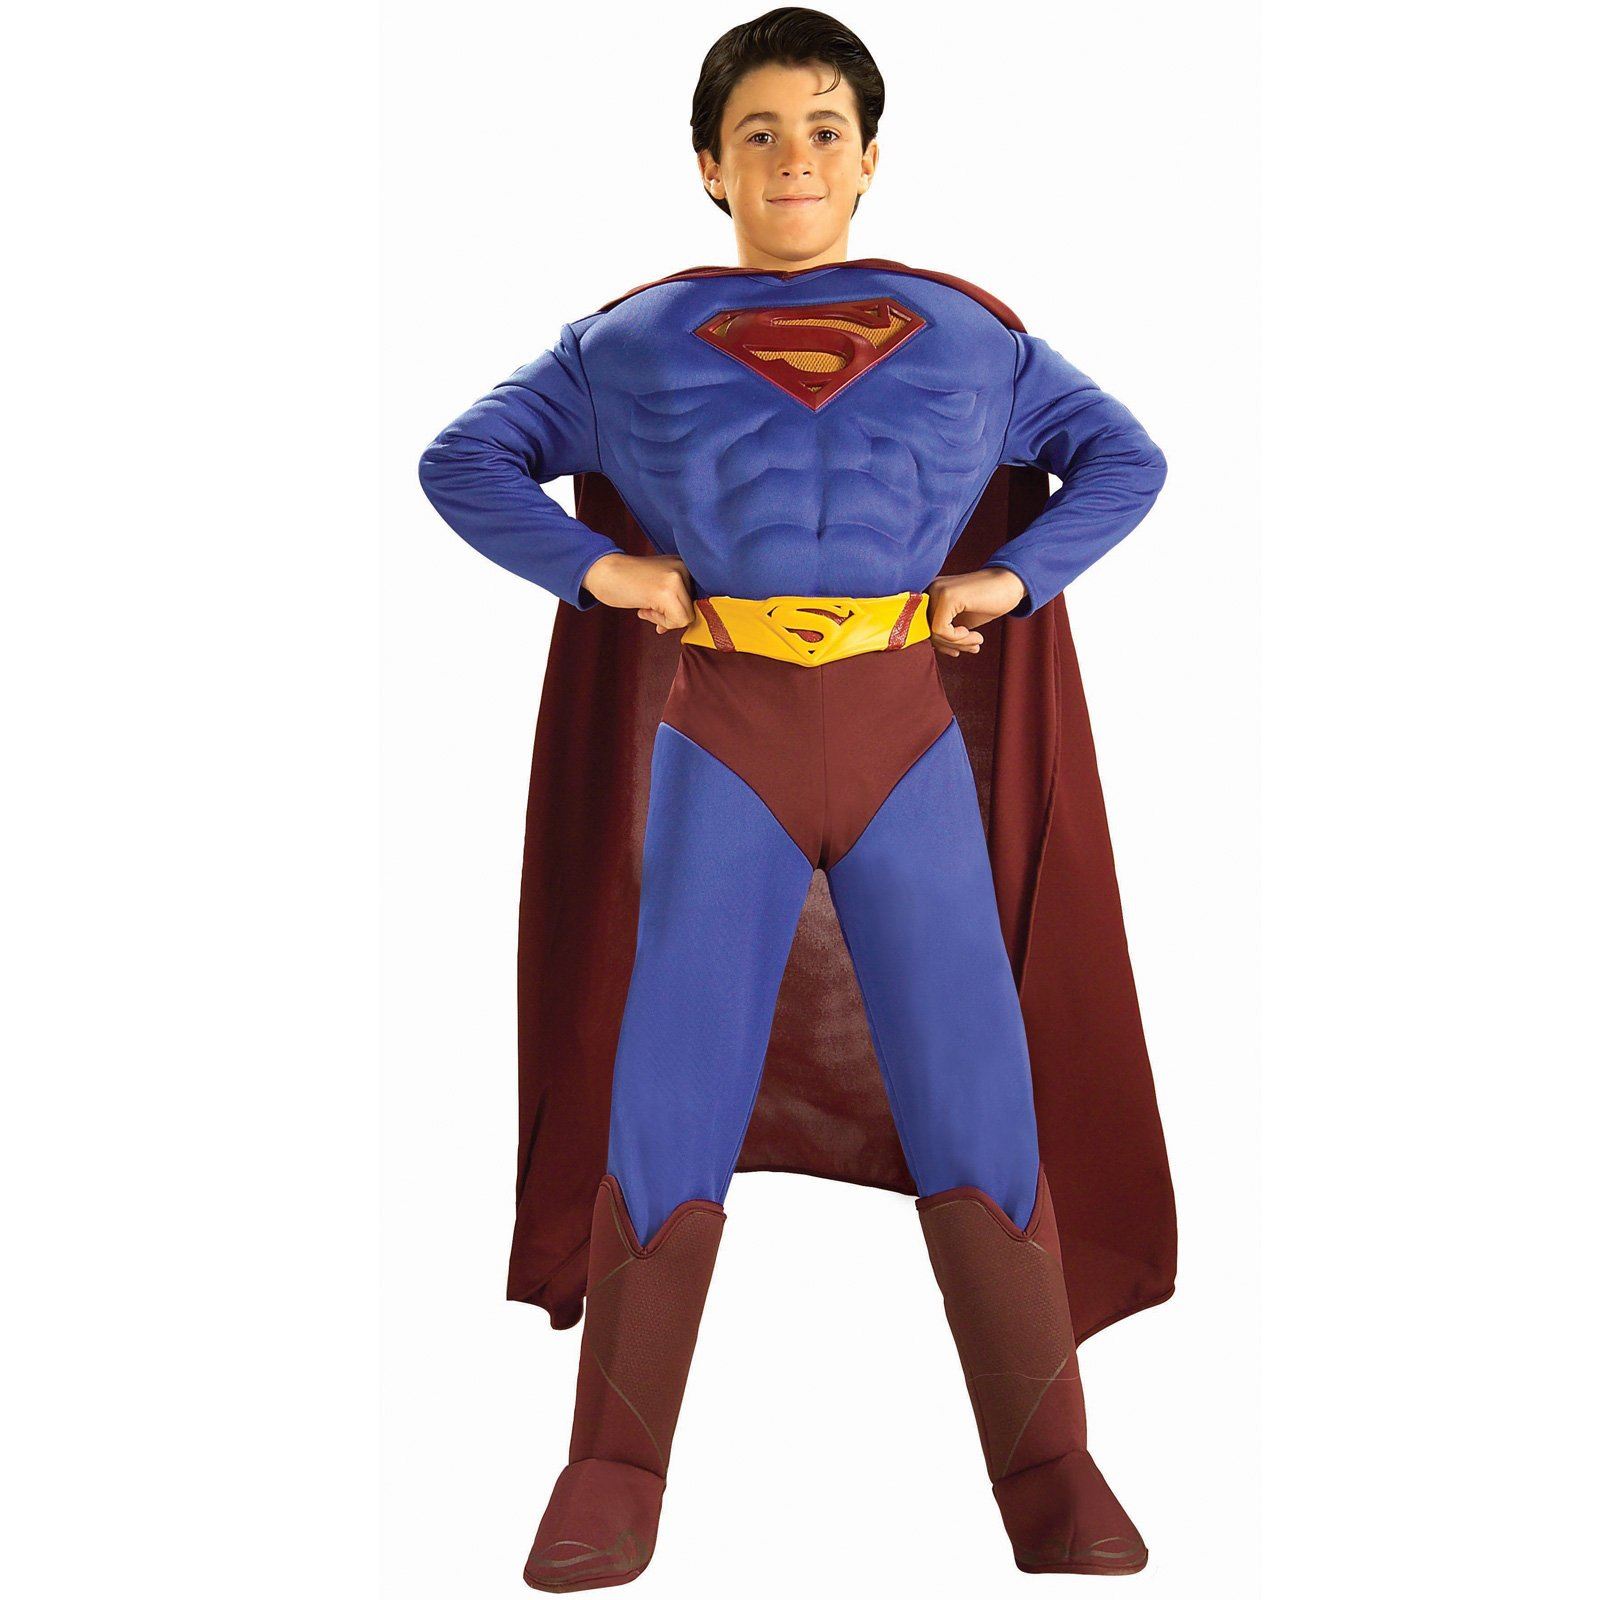 Superman Returns Deluxe Muscle Boys Halloween Costume  $34.99  The 